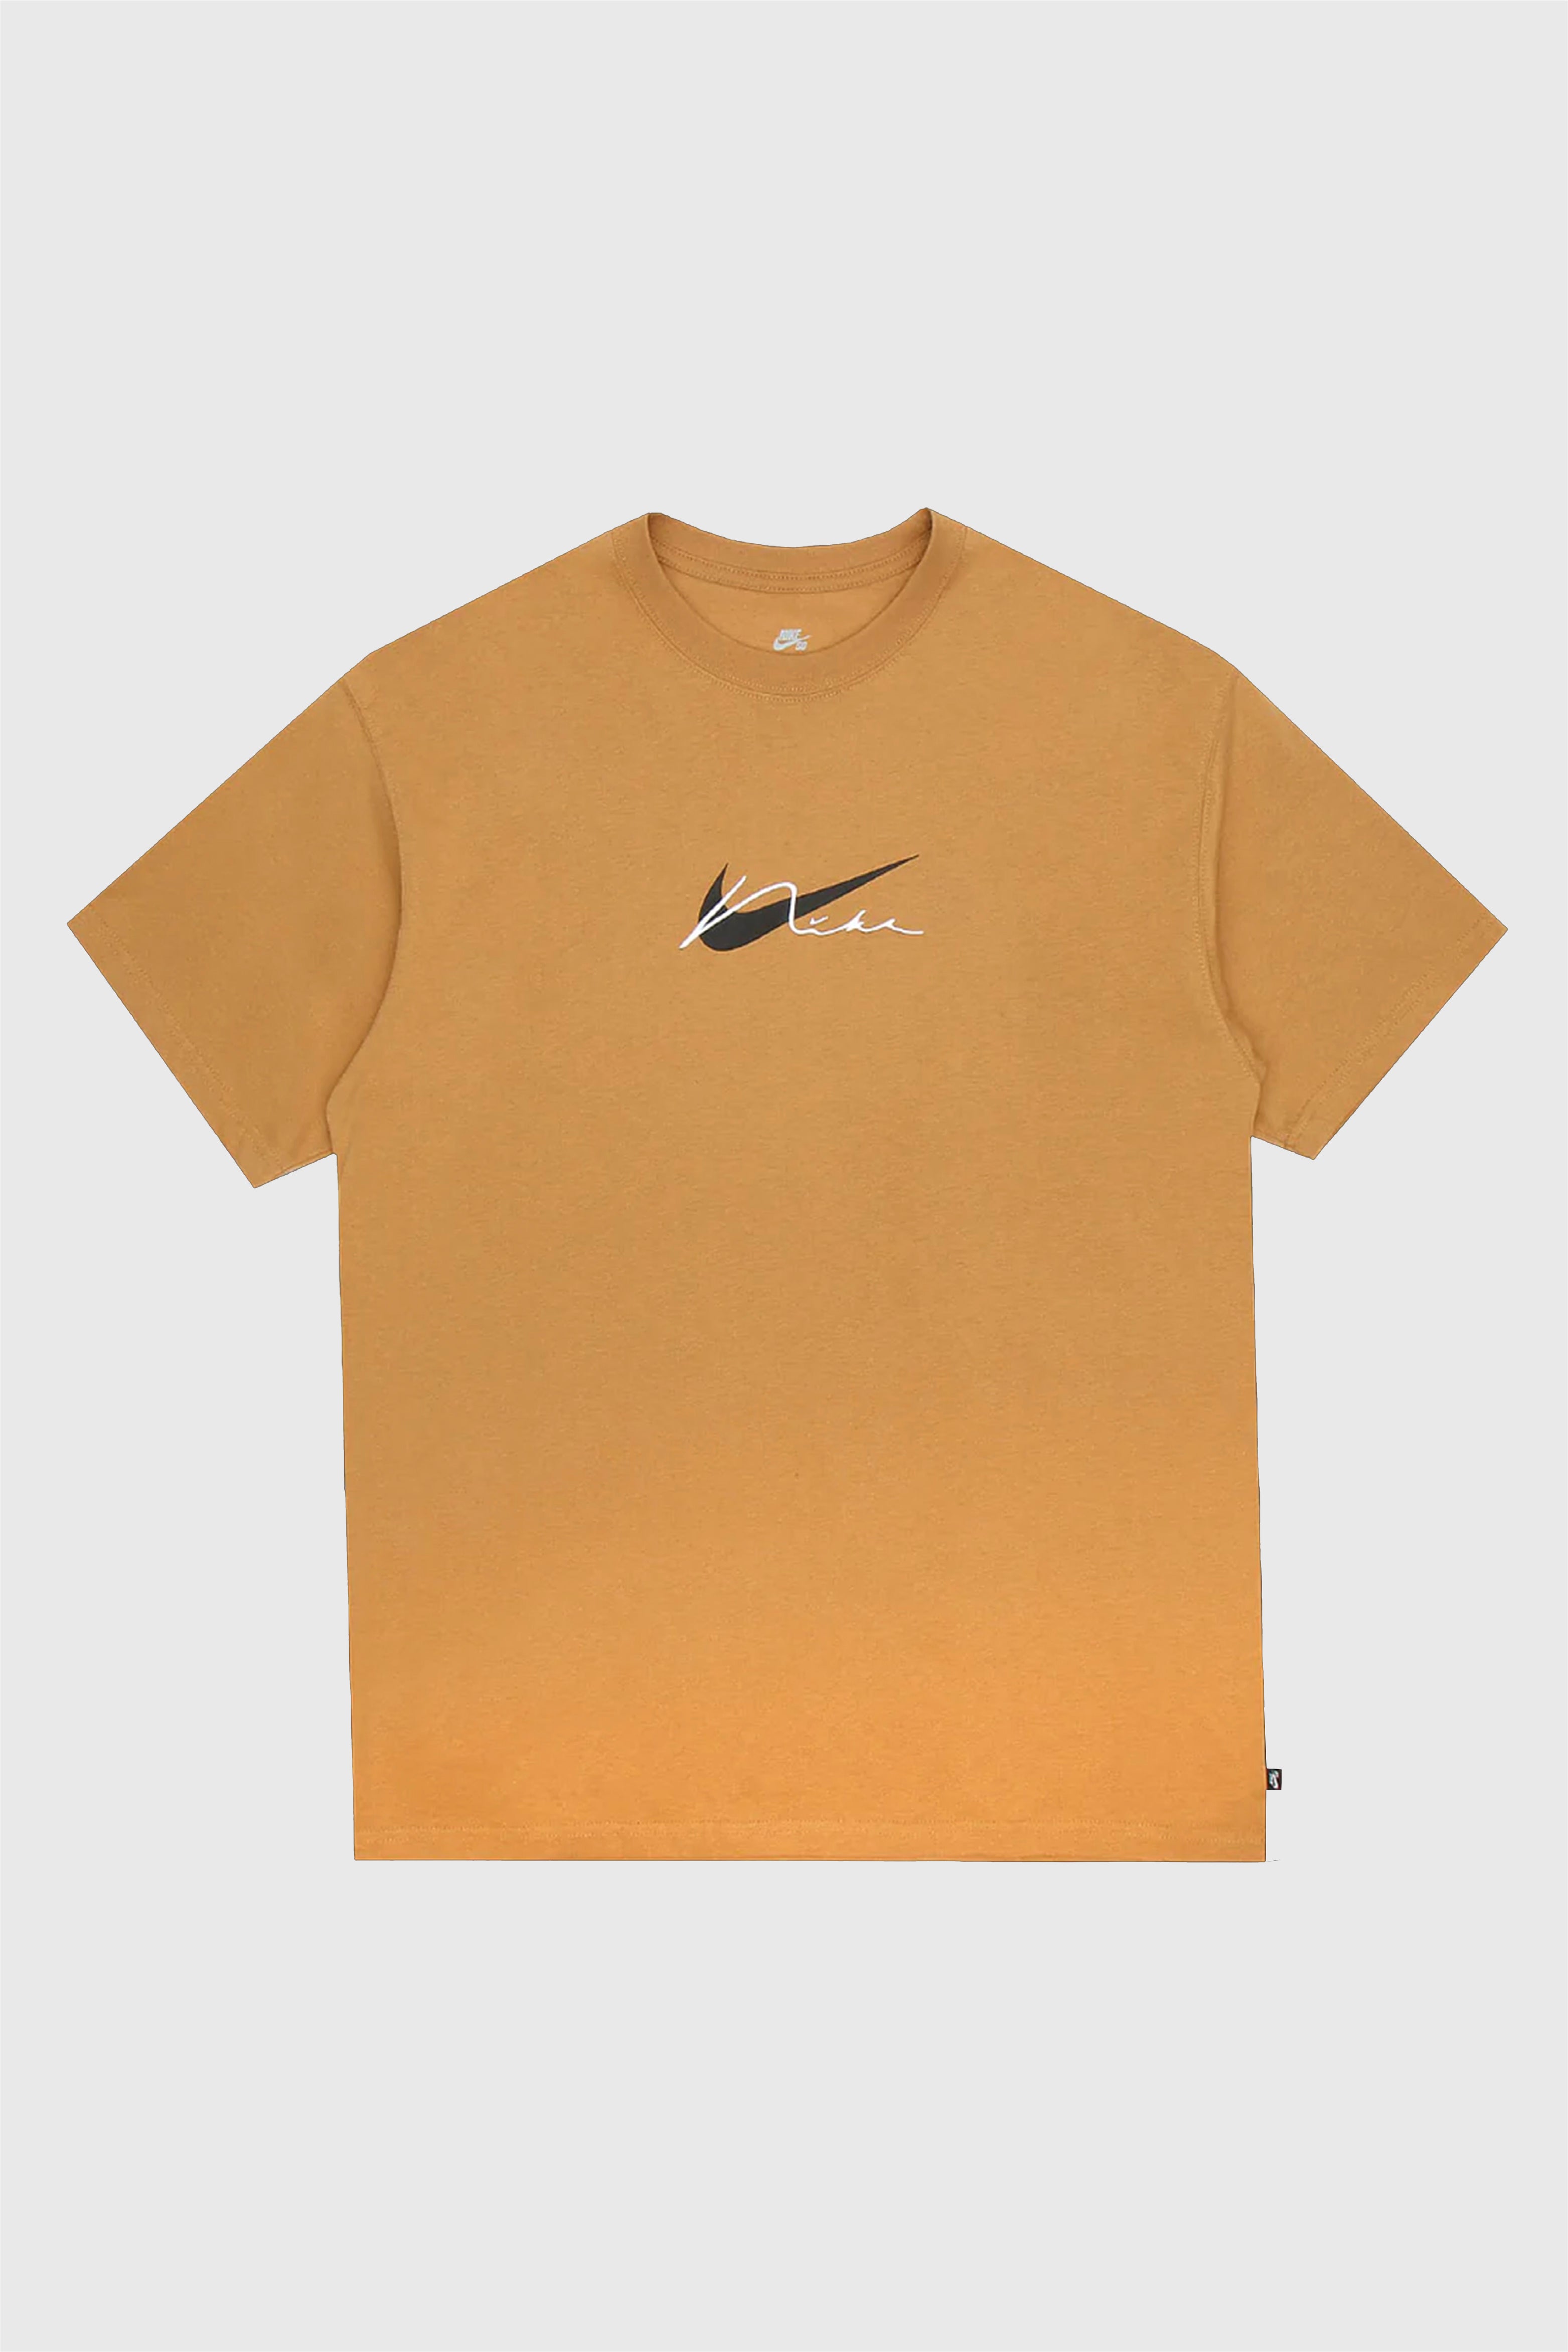 Selectshop FRAME - NIKE SB Nike SB Scribe Tee T-Shirts Concept Store Dubai